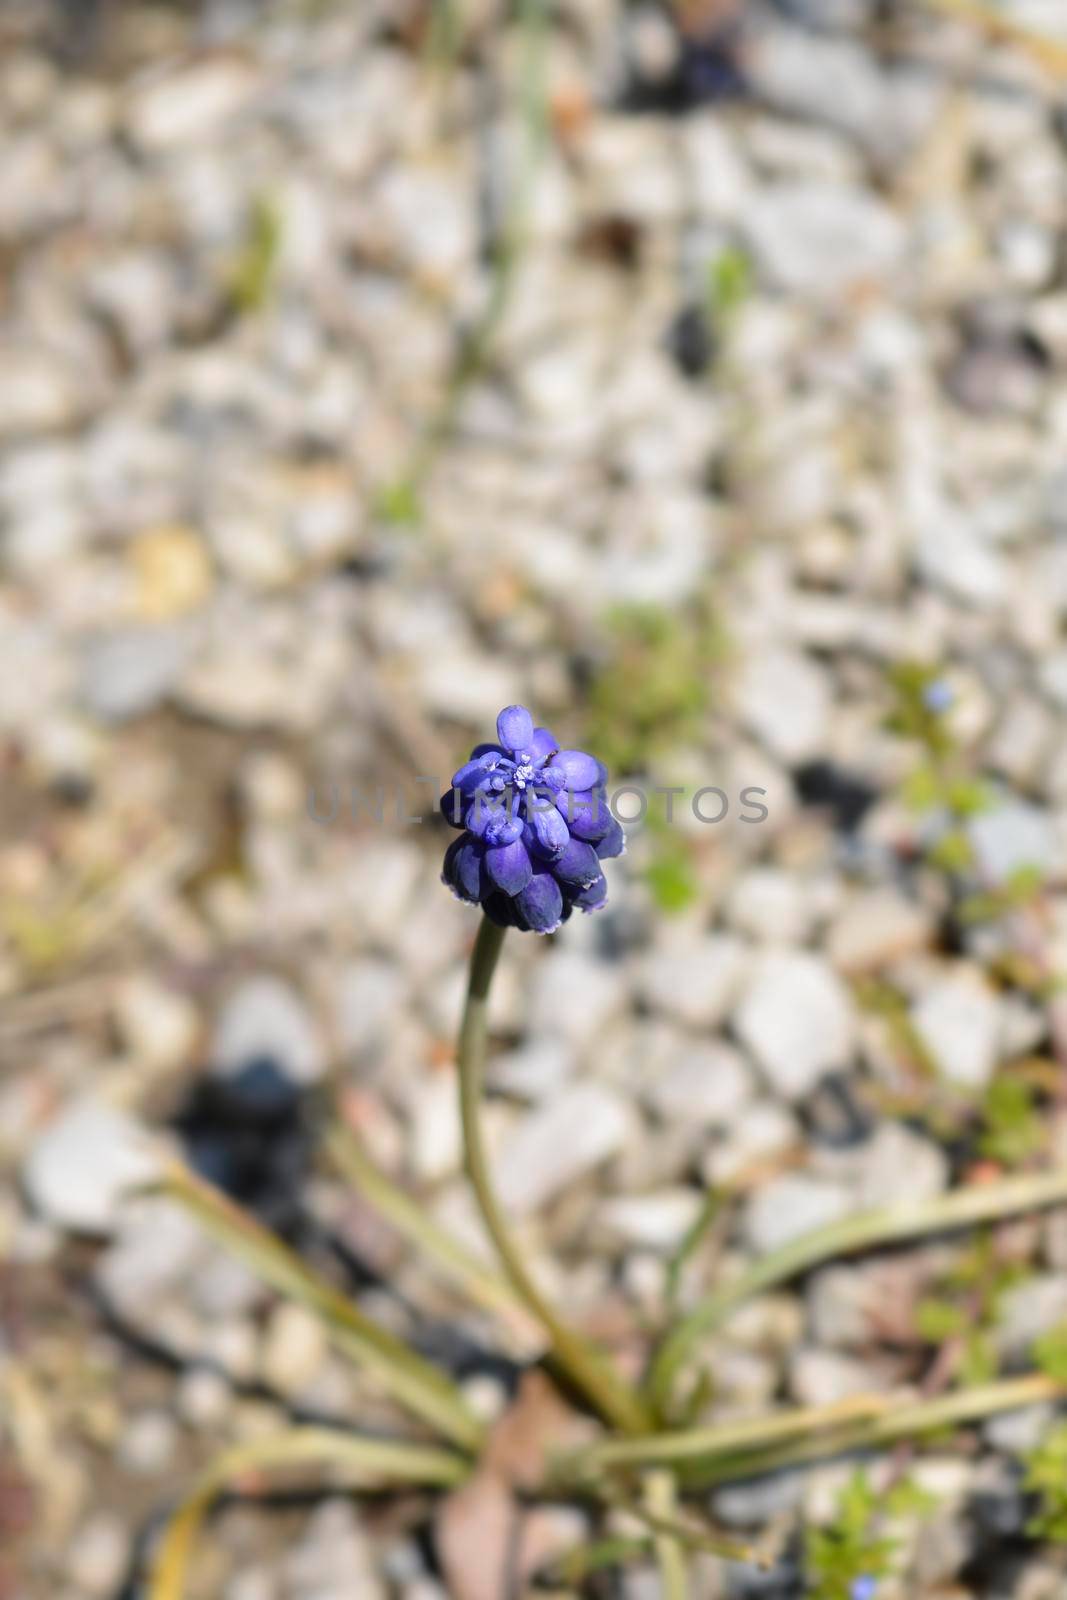 Common grape hyacinth by nahhan